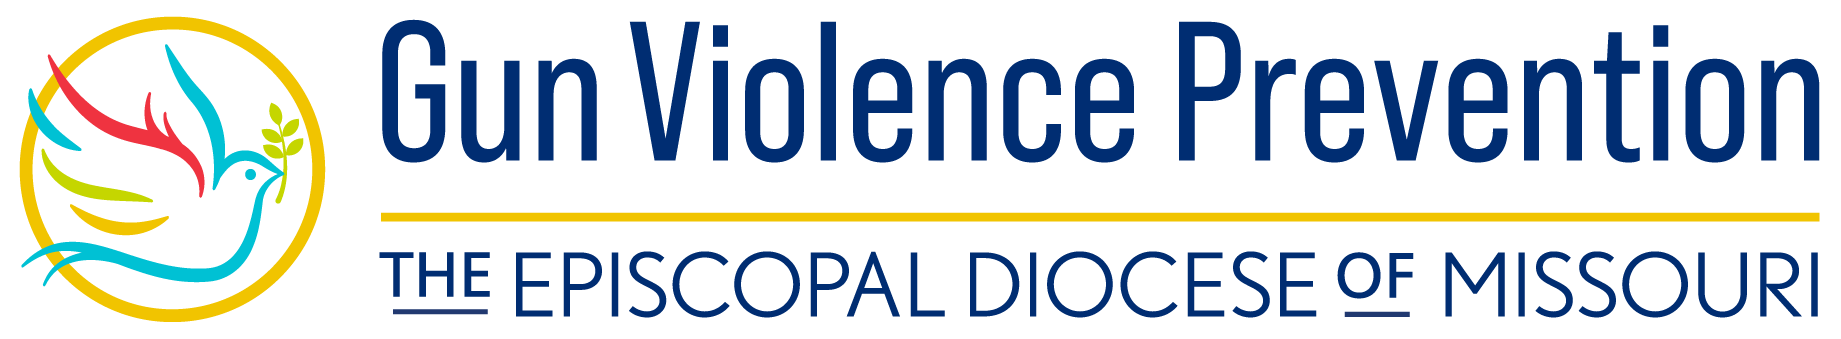 gunviolenceprevention-logo-rgb_236